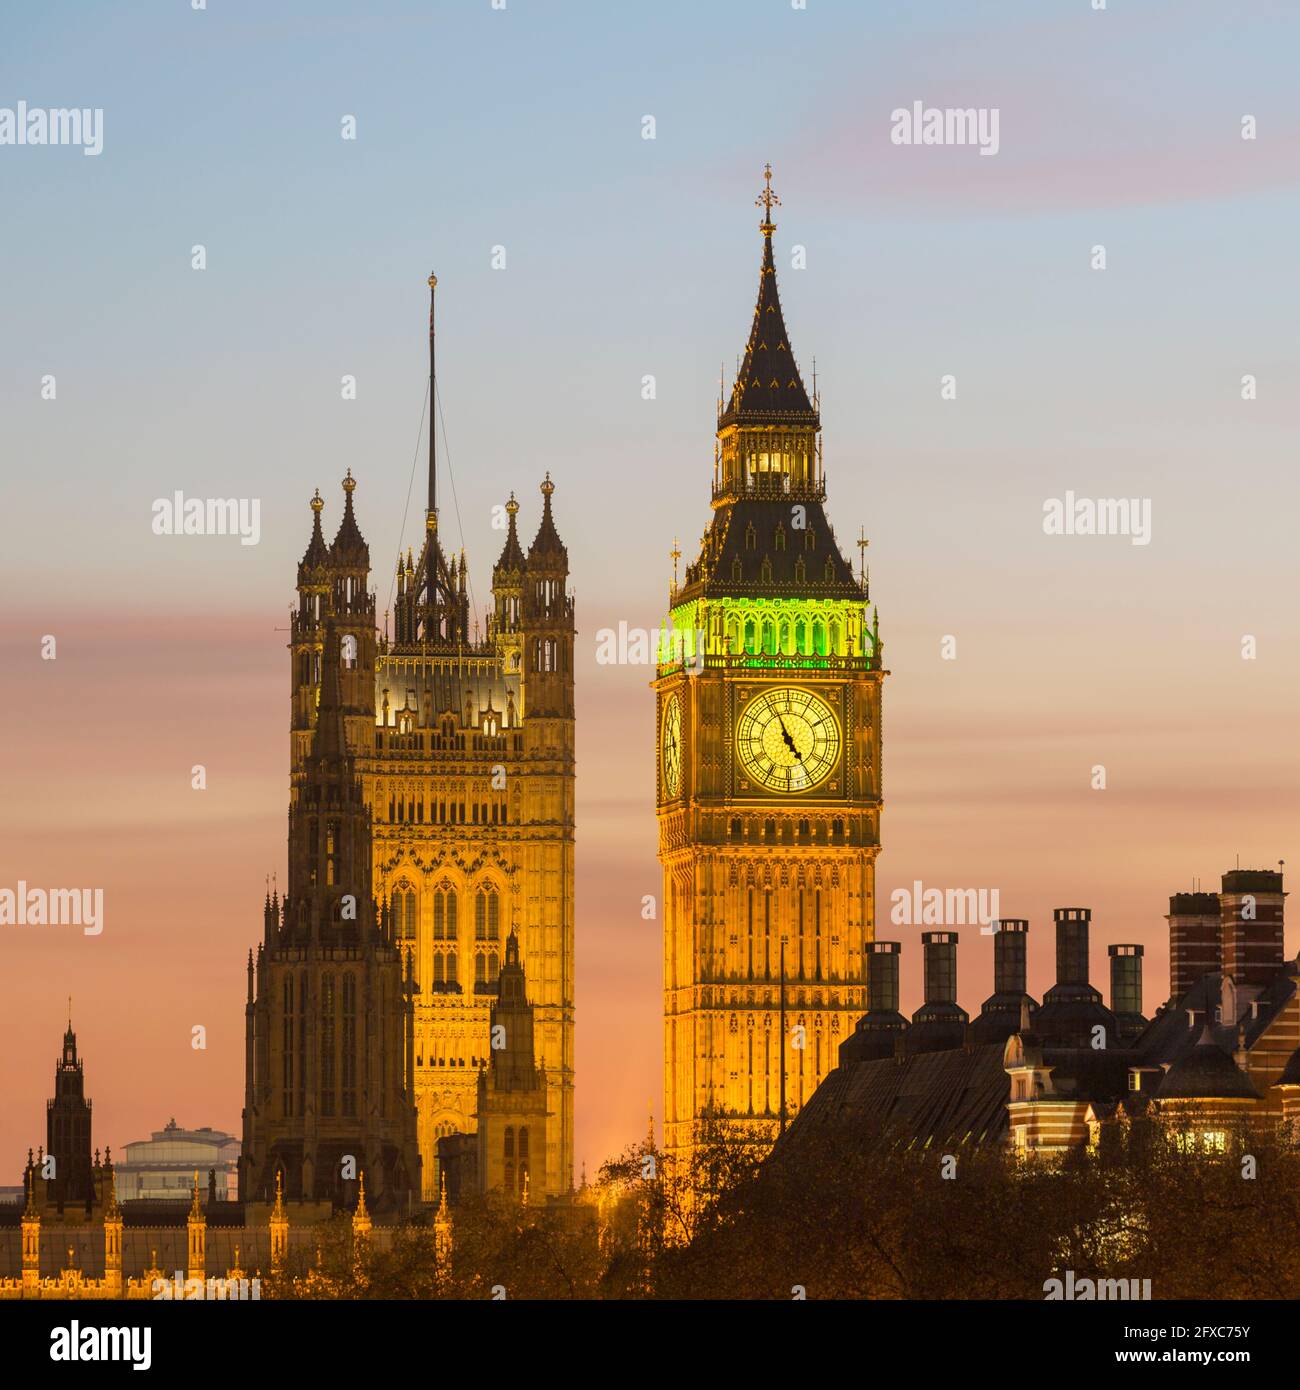 UK, England, London, Elizabeth Tower Palace of Westminster and Big Ben at dusk Stock Photo